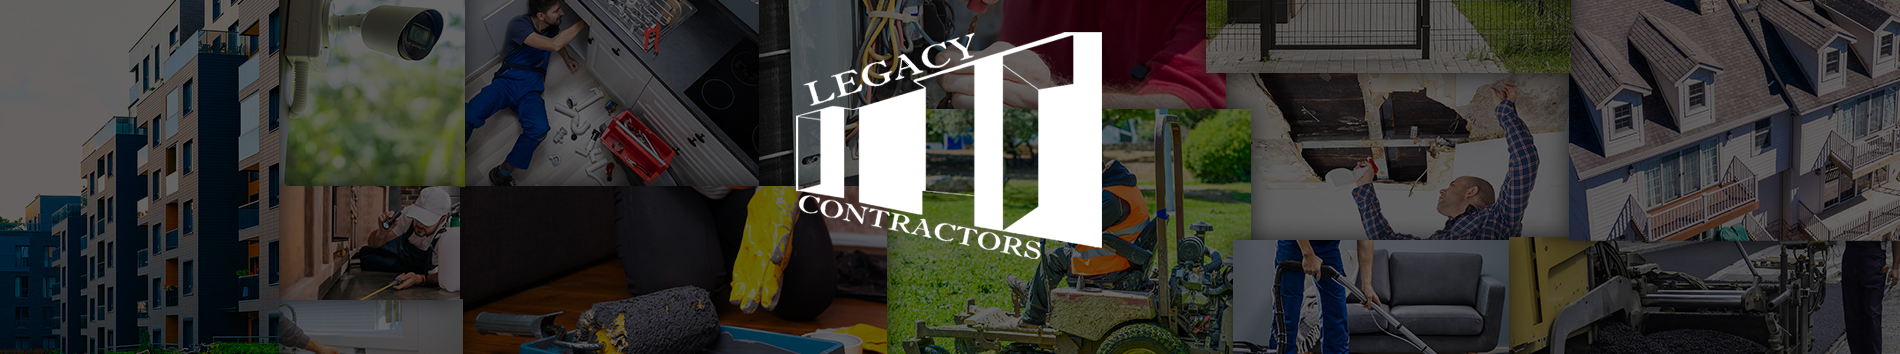 Legacy Contractors